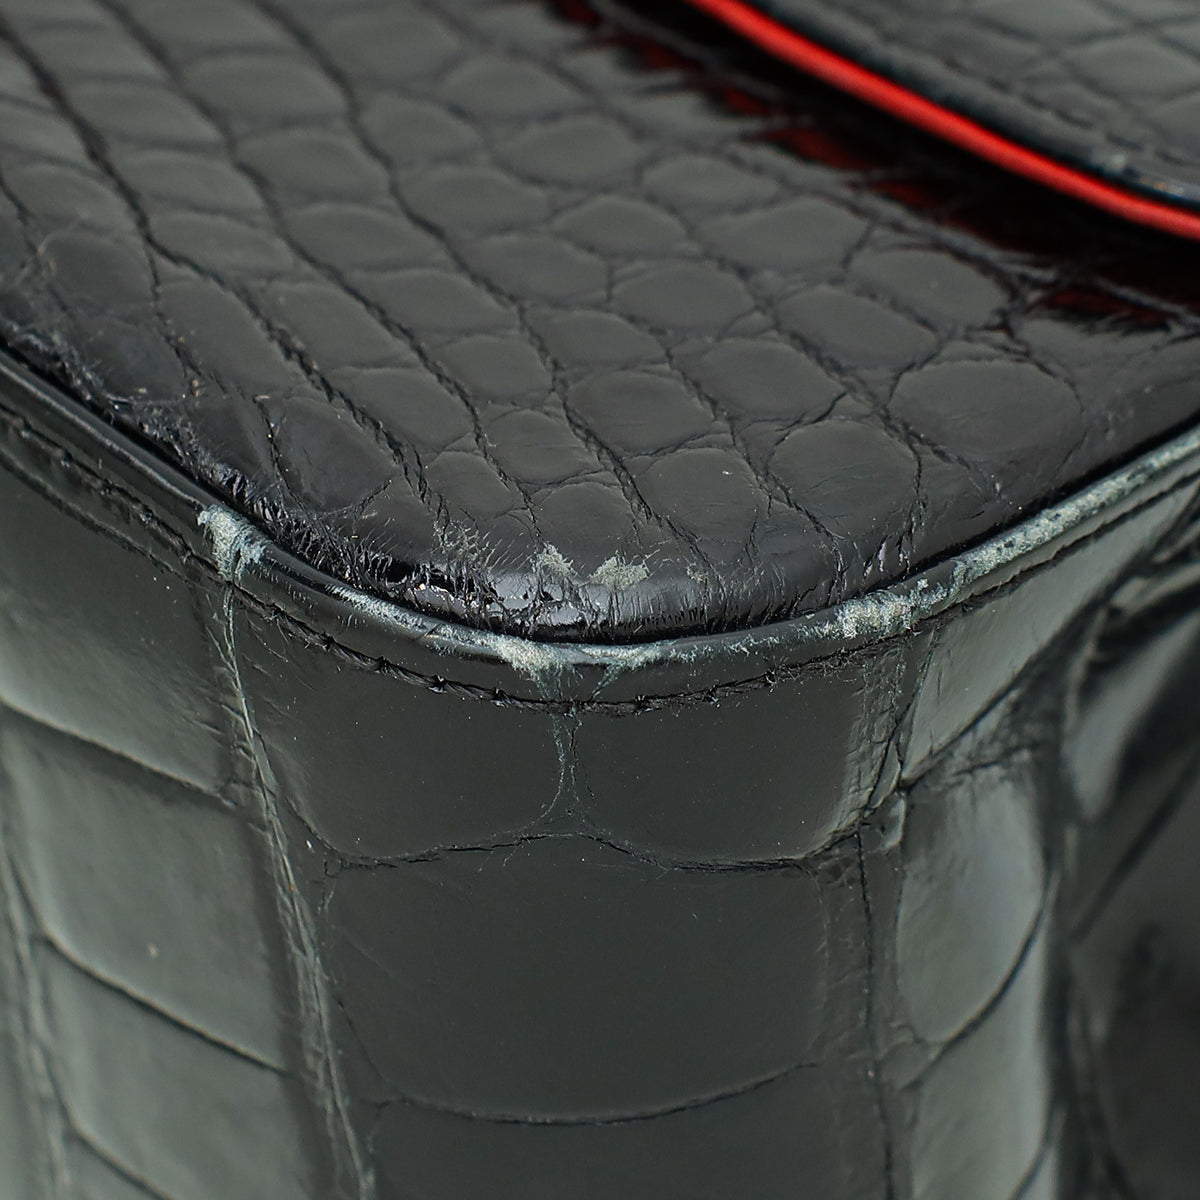 Chanel Black Shiny Alligator Classic Double Flap Maxi Bag